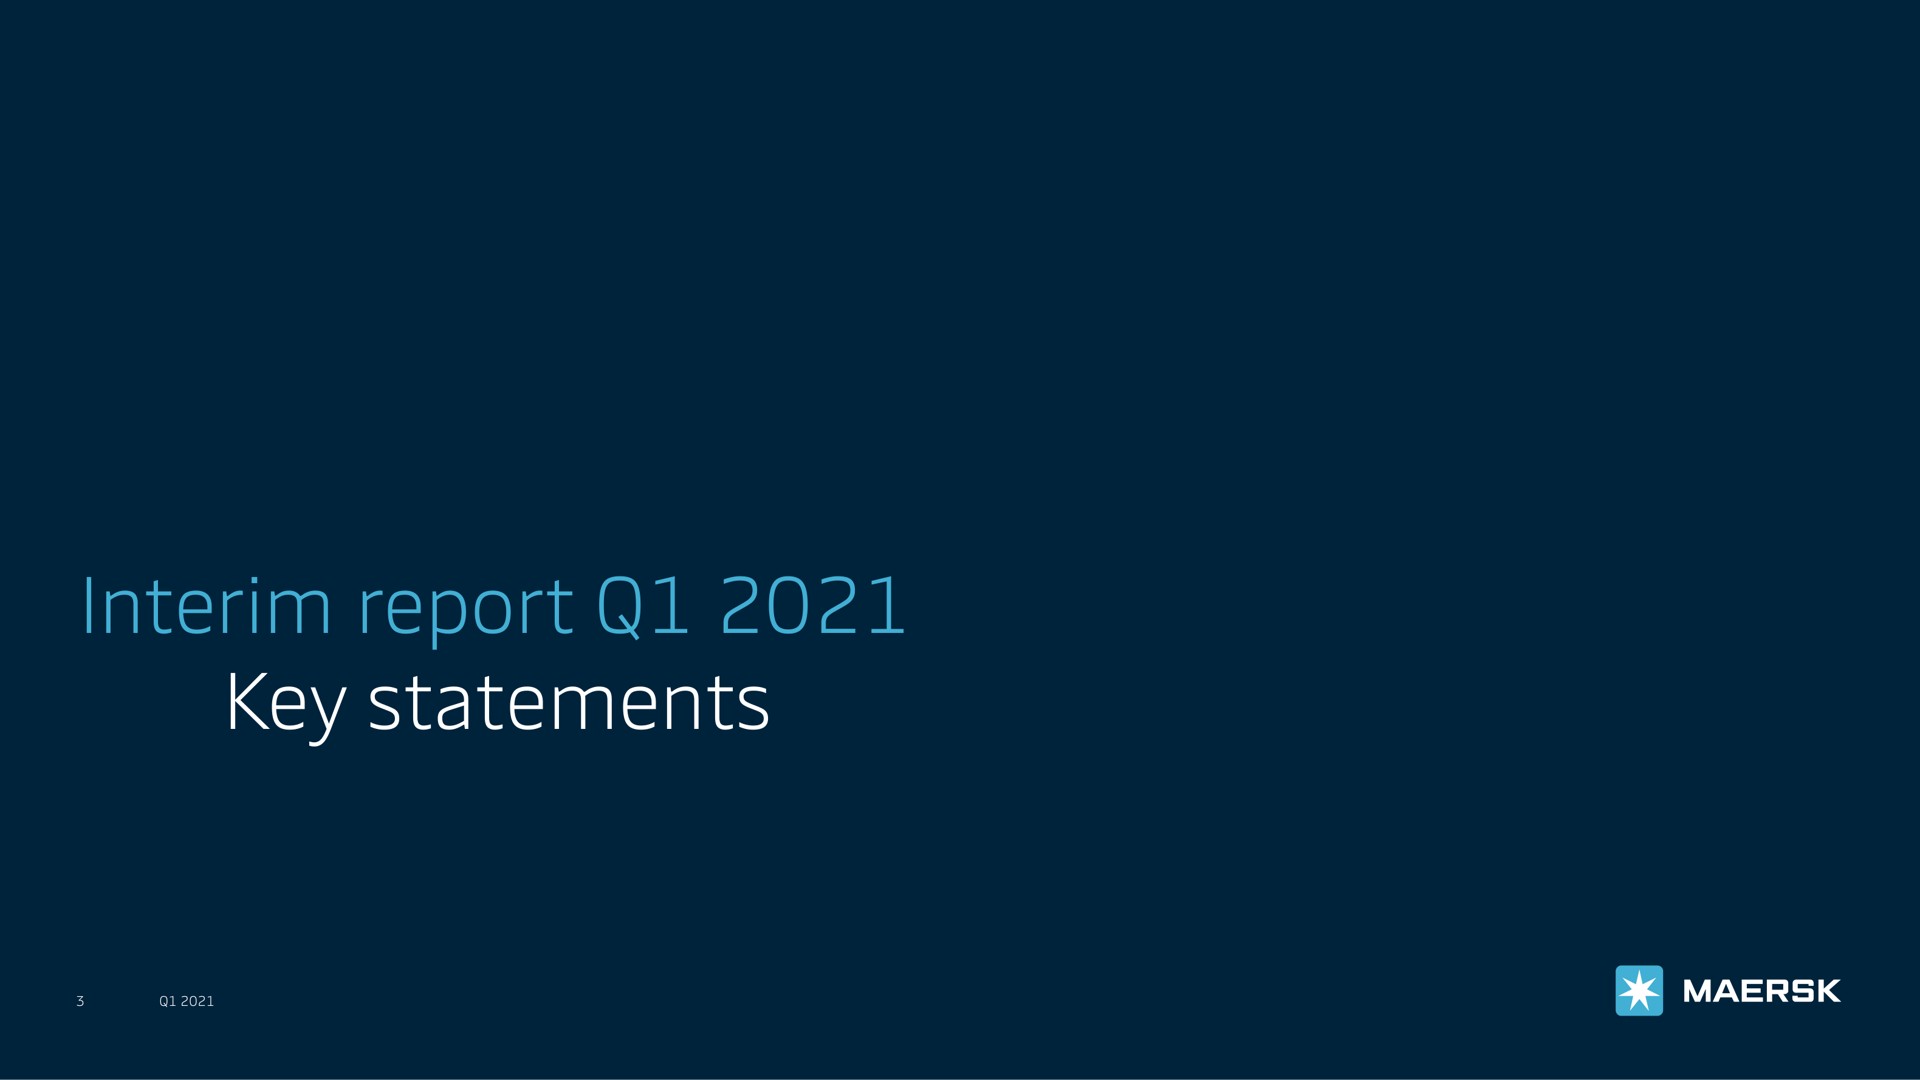 interim report key statements am | Maersk